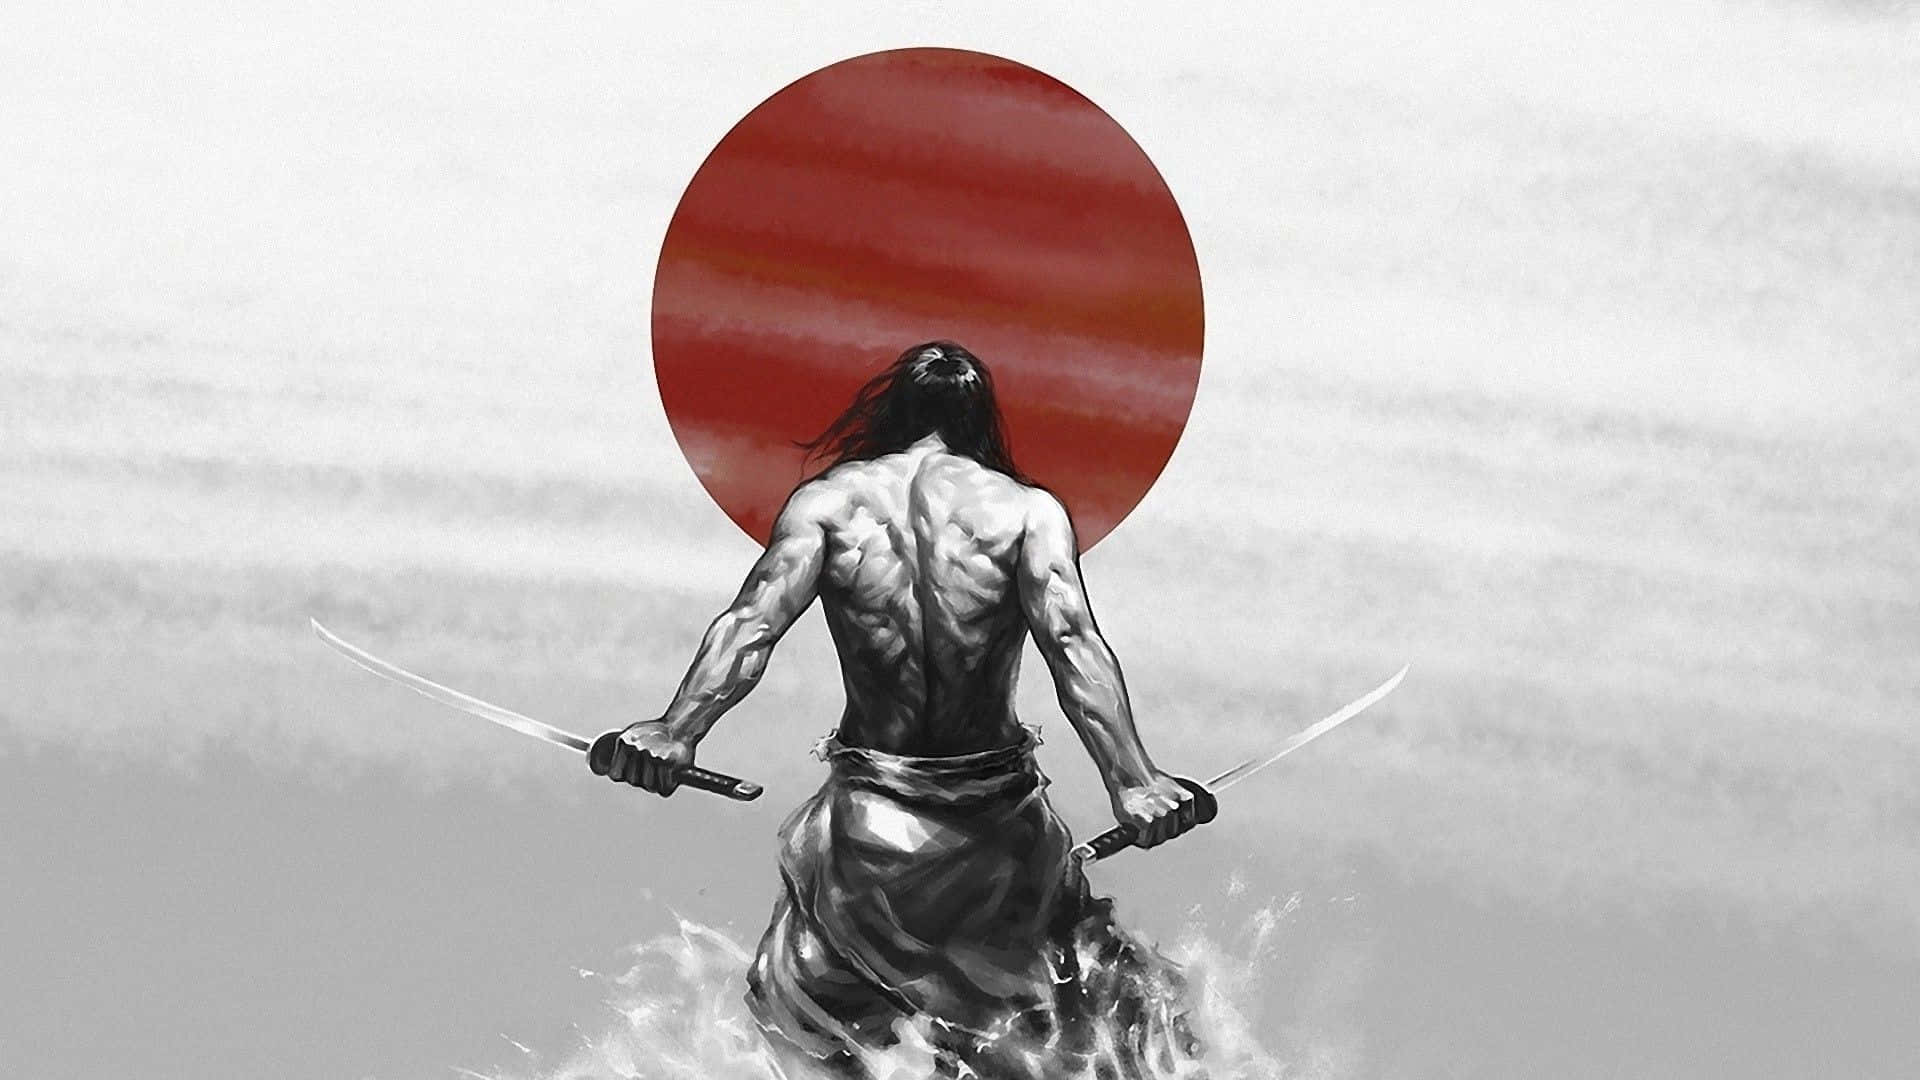 A historical samurai on a journey of war